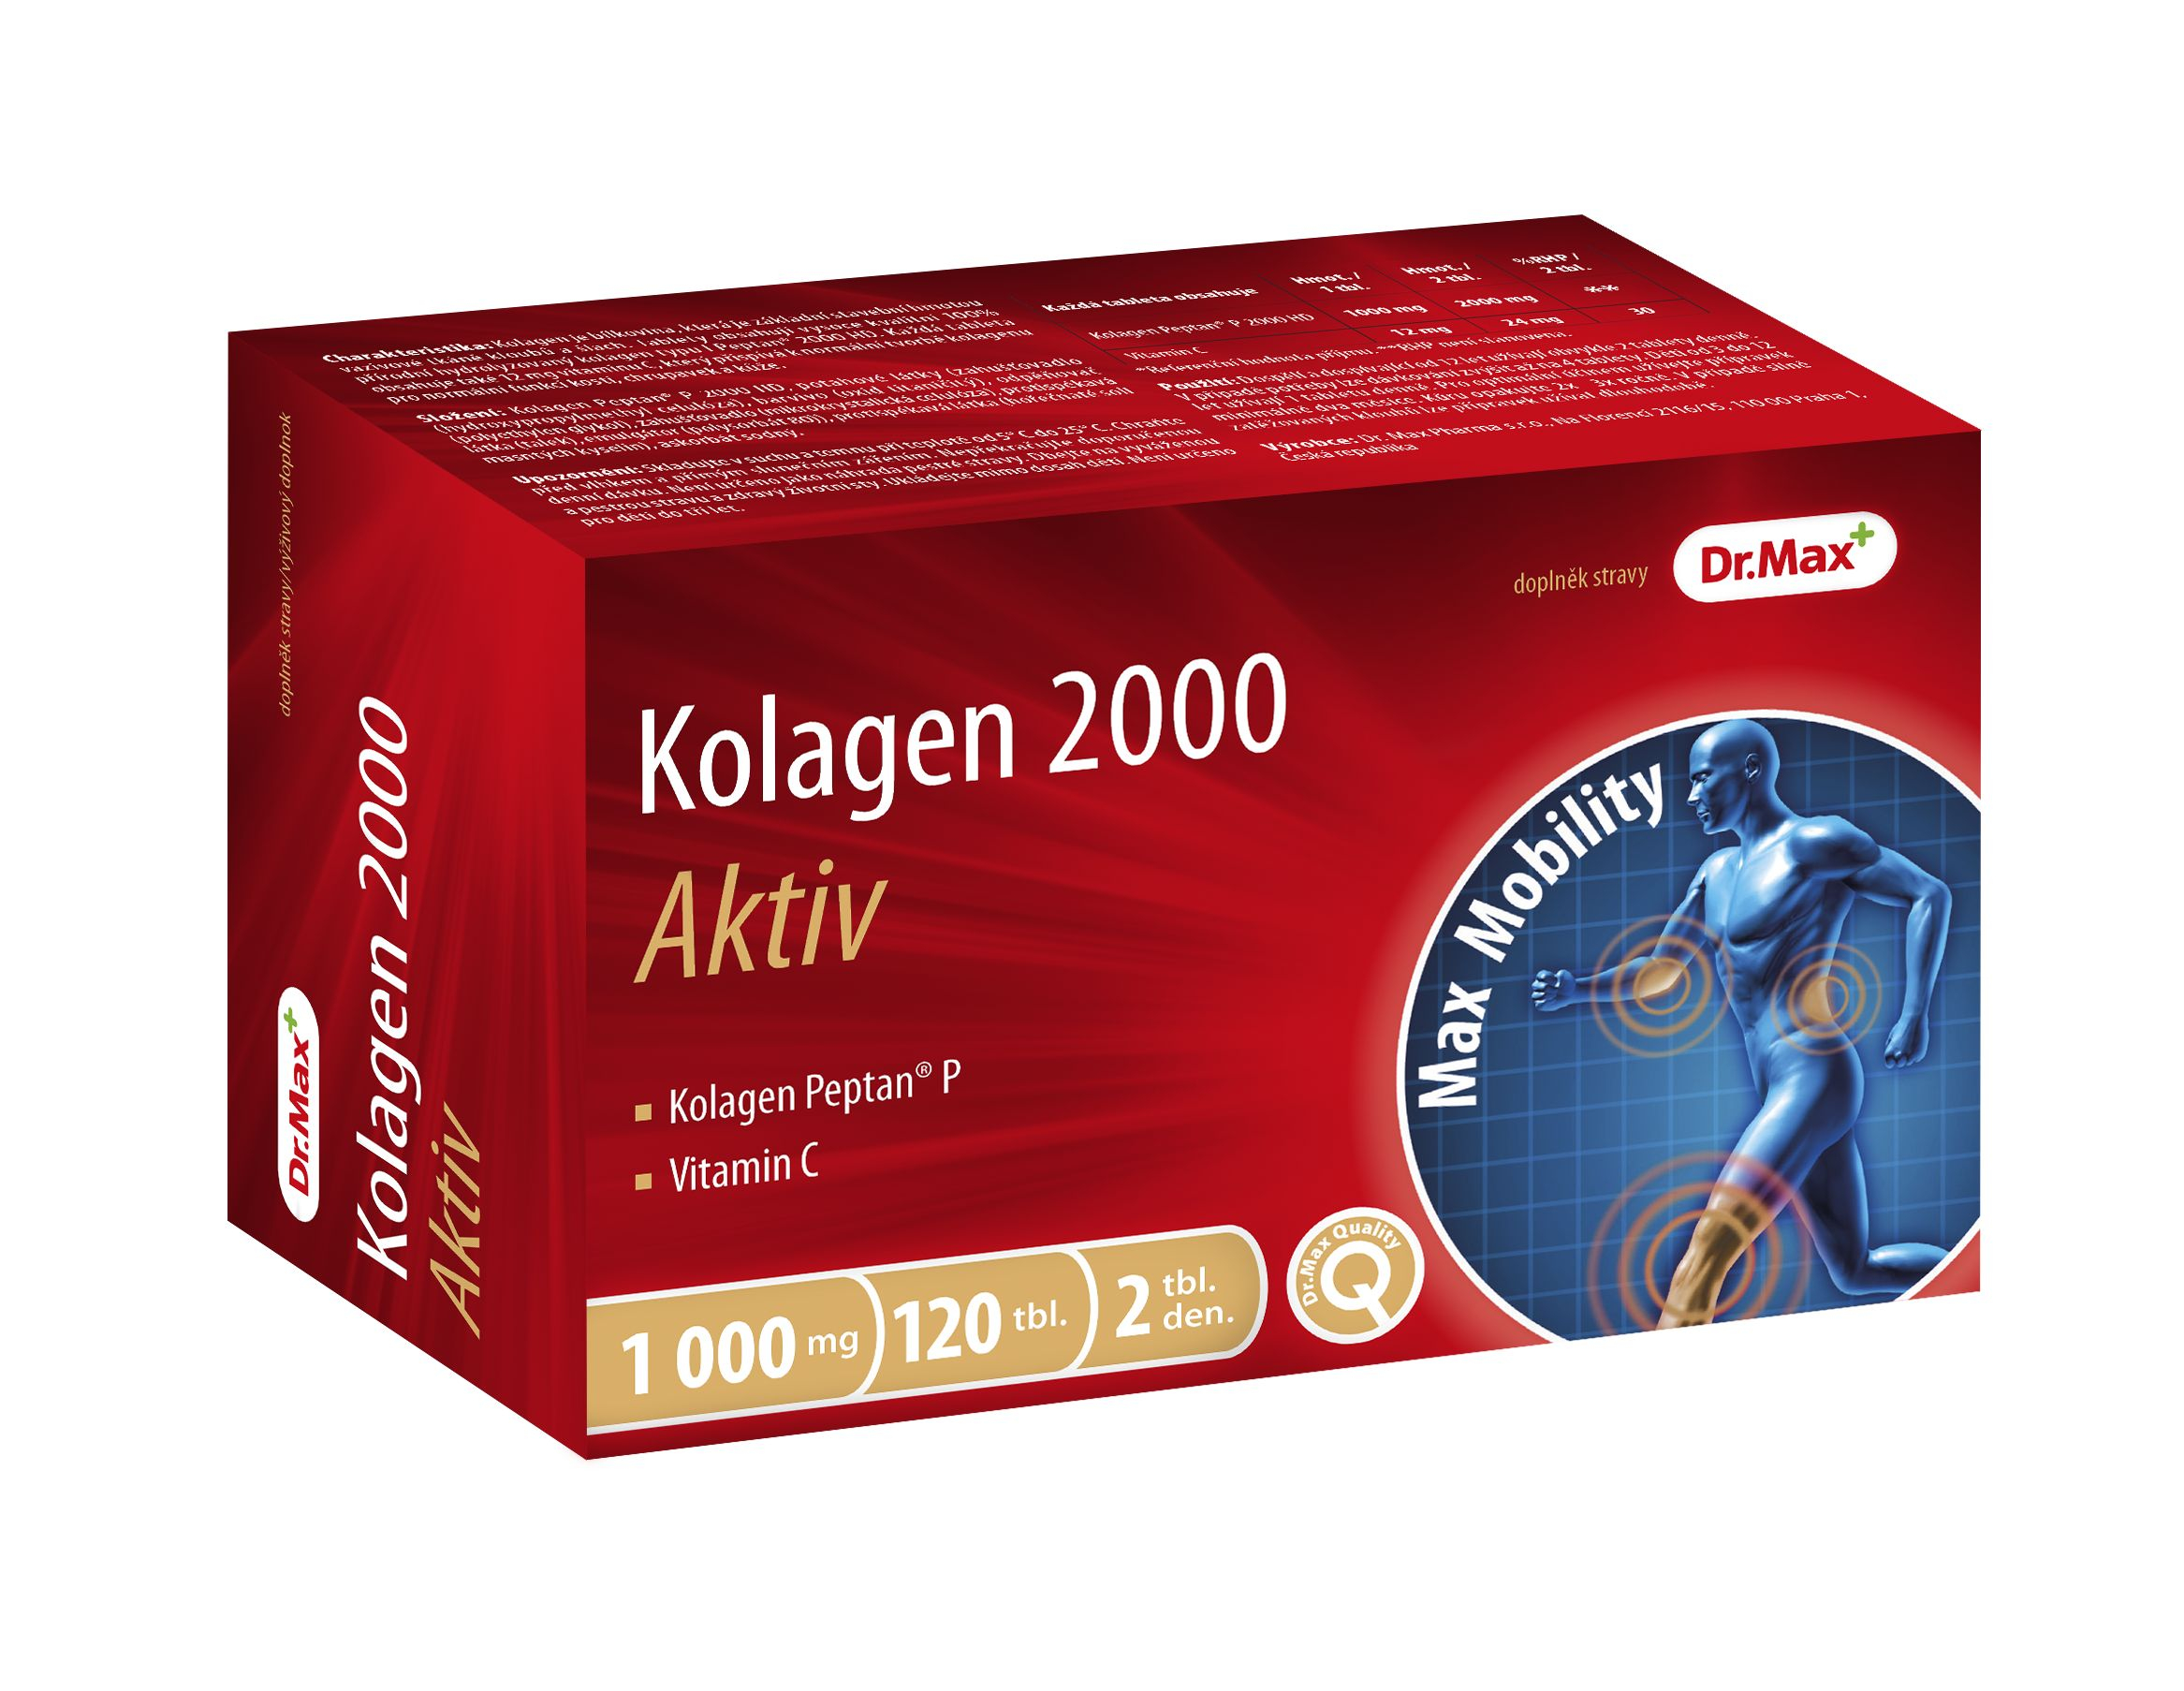 Dr.Max Kolagen 2000 Aktiv 120 tablet Dr.Max